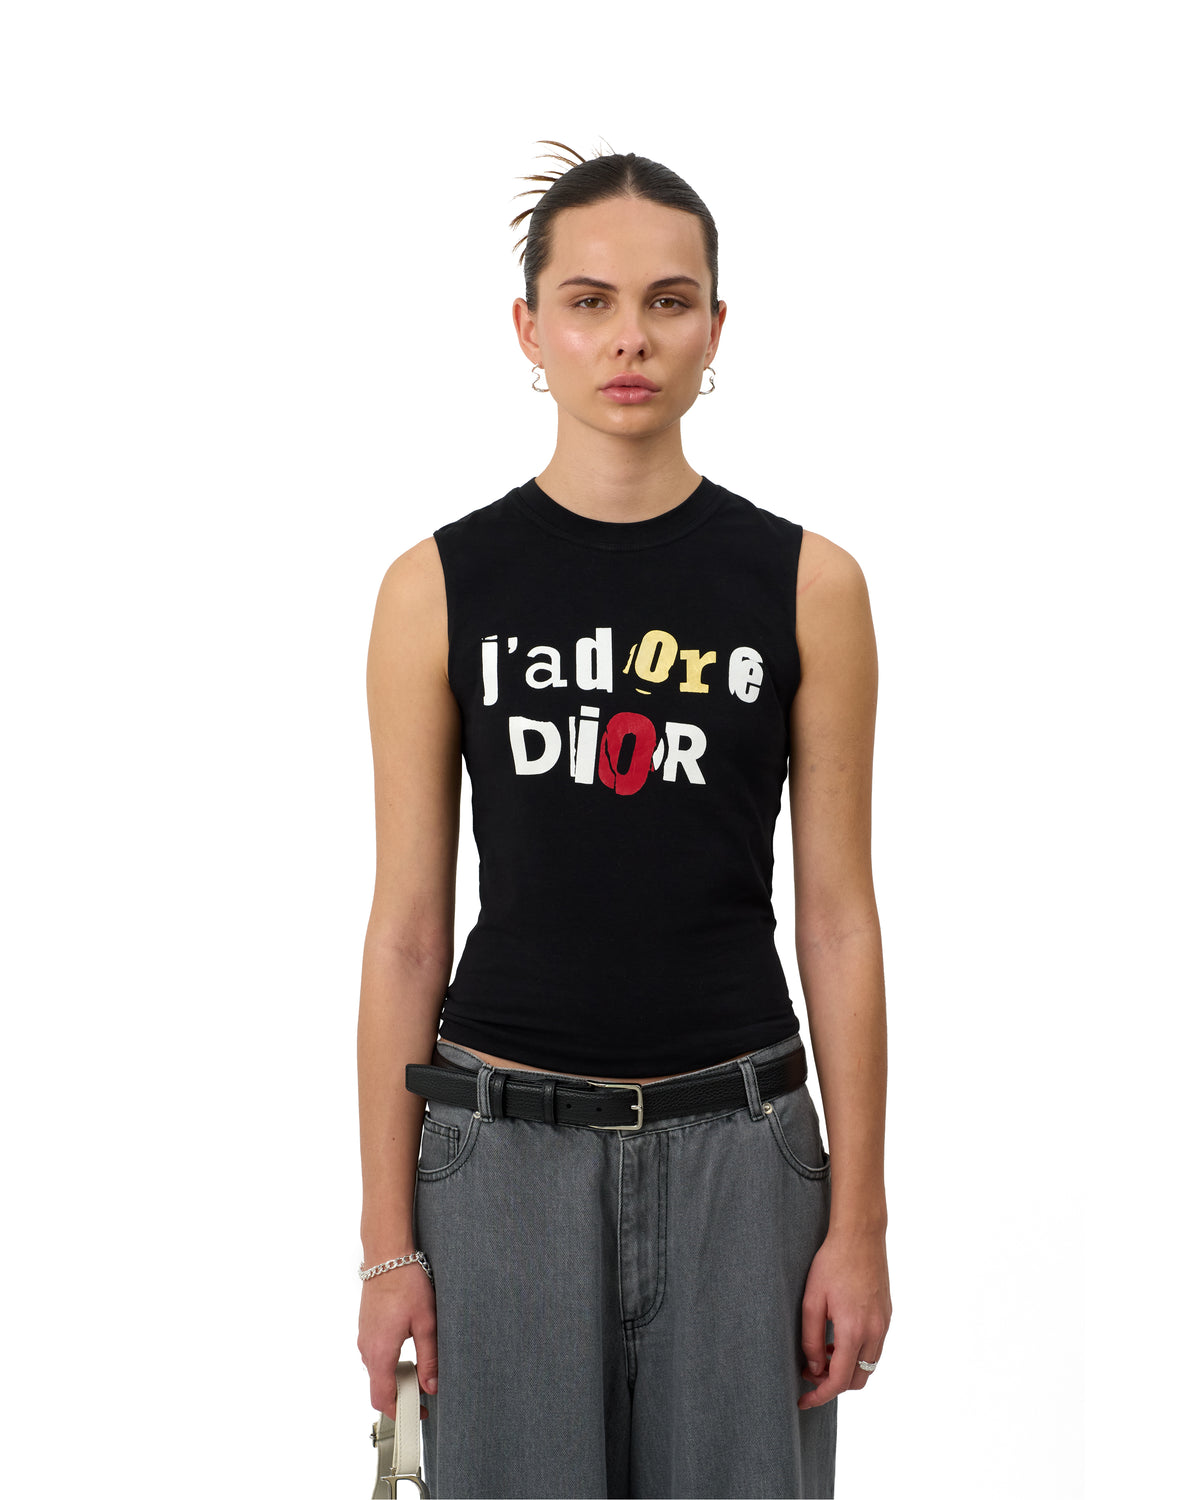 Pre-Owned Christian Dior ‘J’adore Dior’ Top